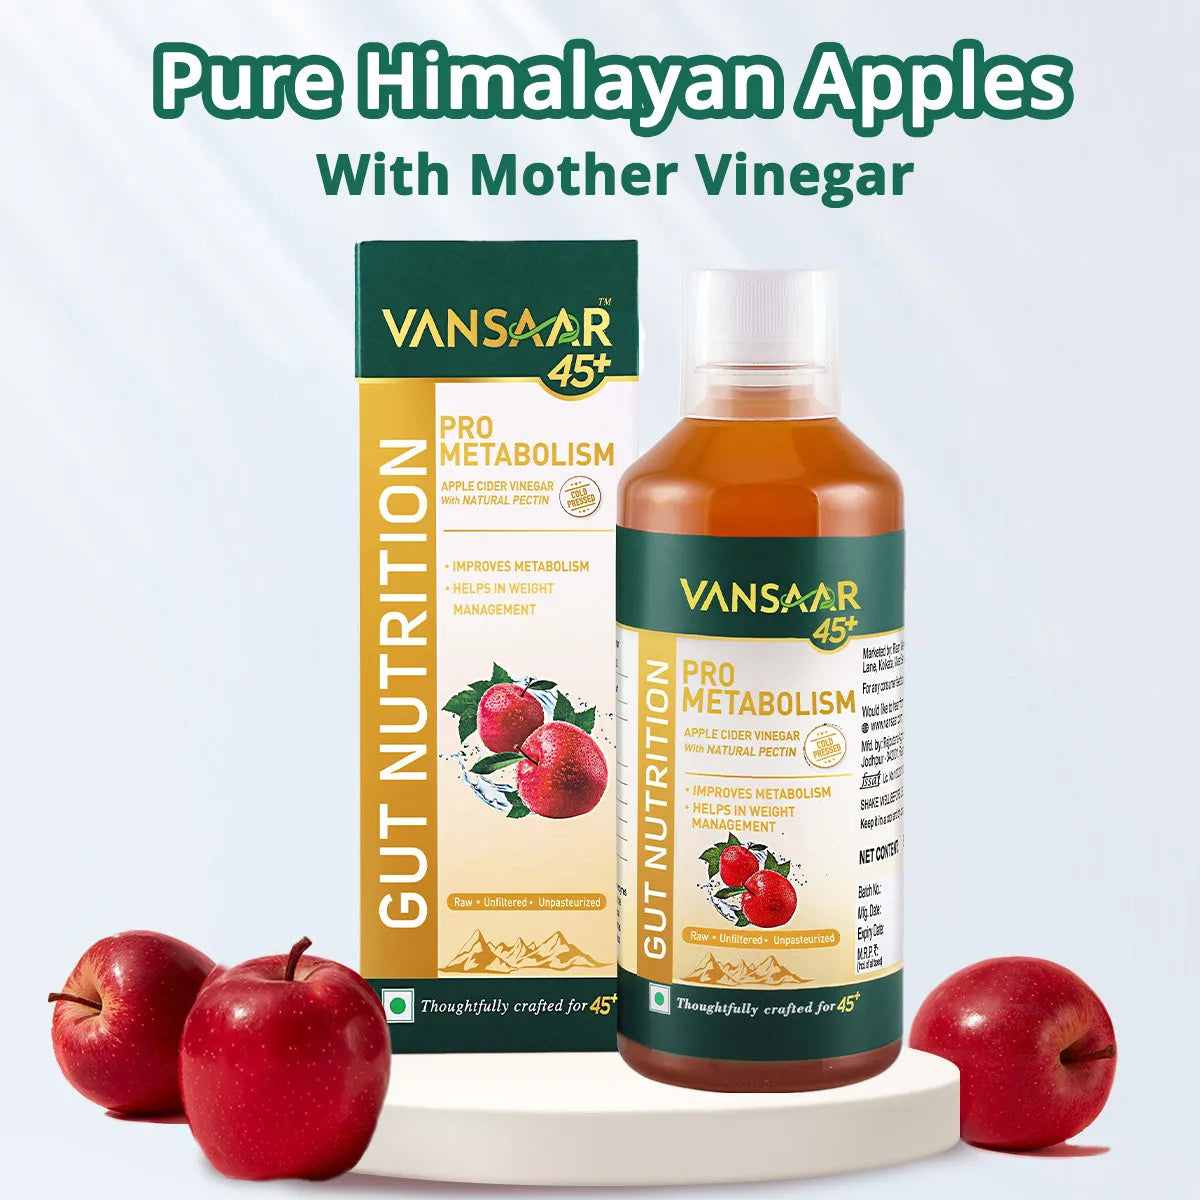 Pro Metabolism Apple Cider Vinegar With Mother Vinegar | Aids Weight Management | Raw, Unfiltered & Unpasteurized - Vansaar